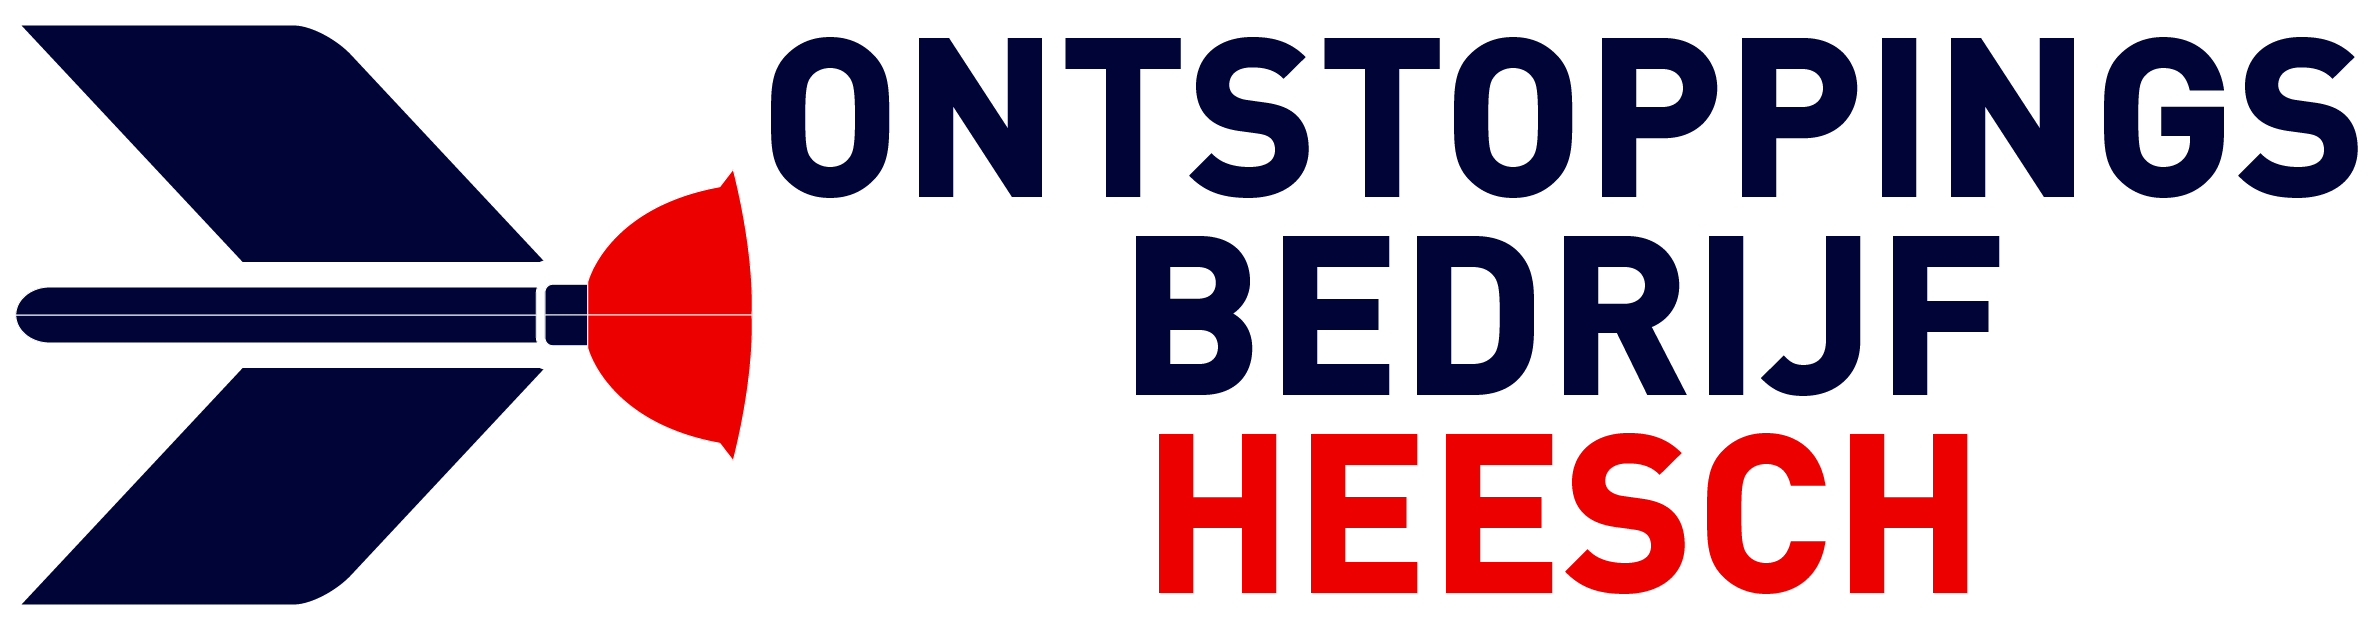 Ontstoppingsbedrijf Heesch logo